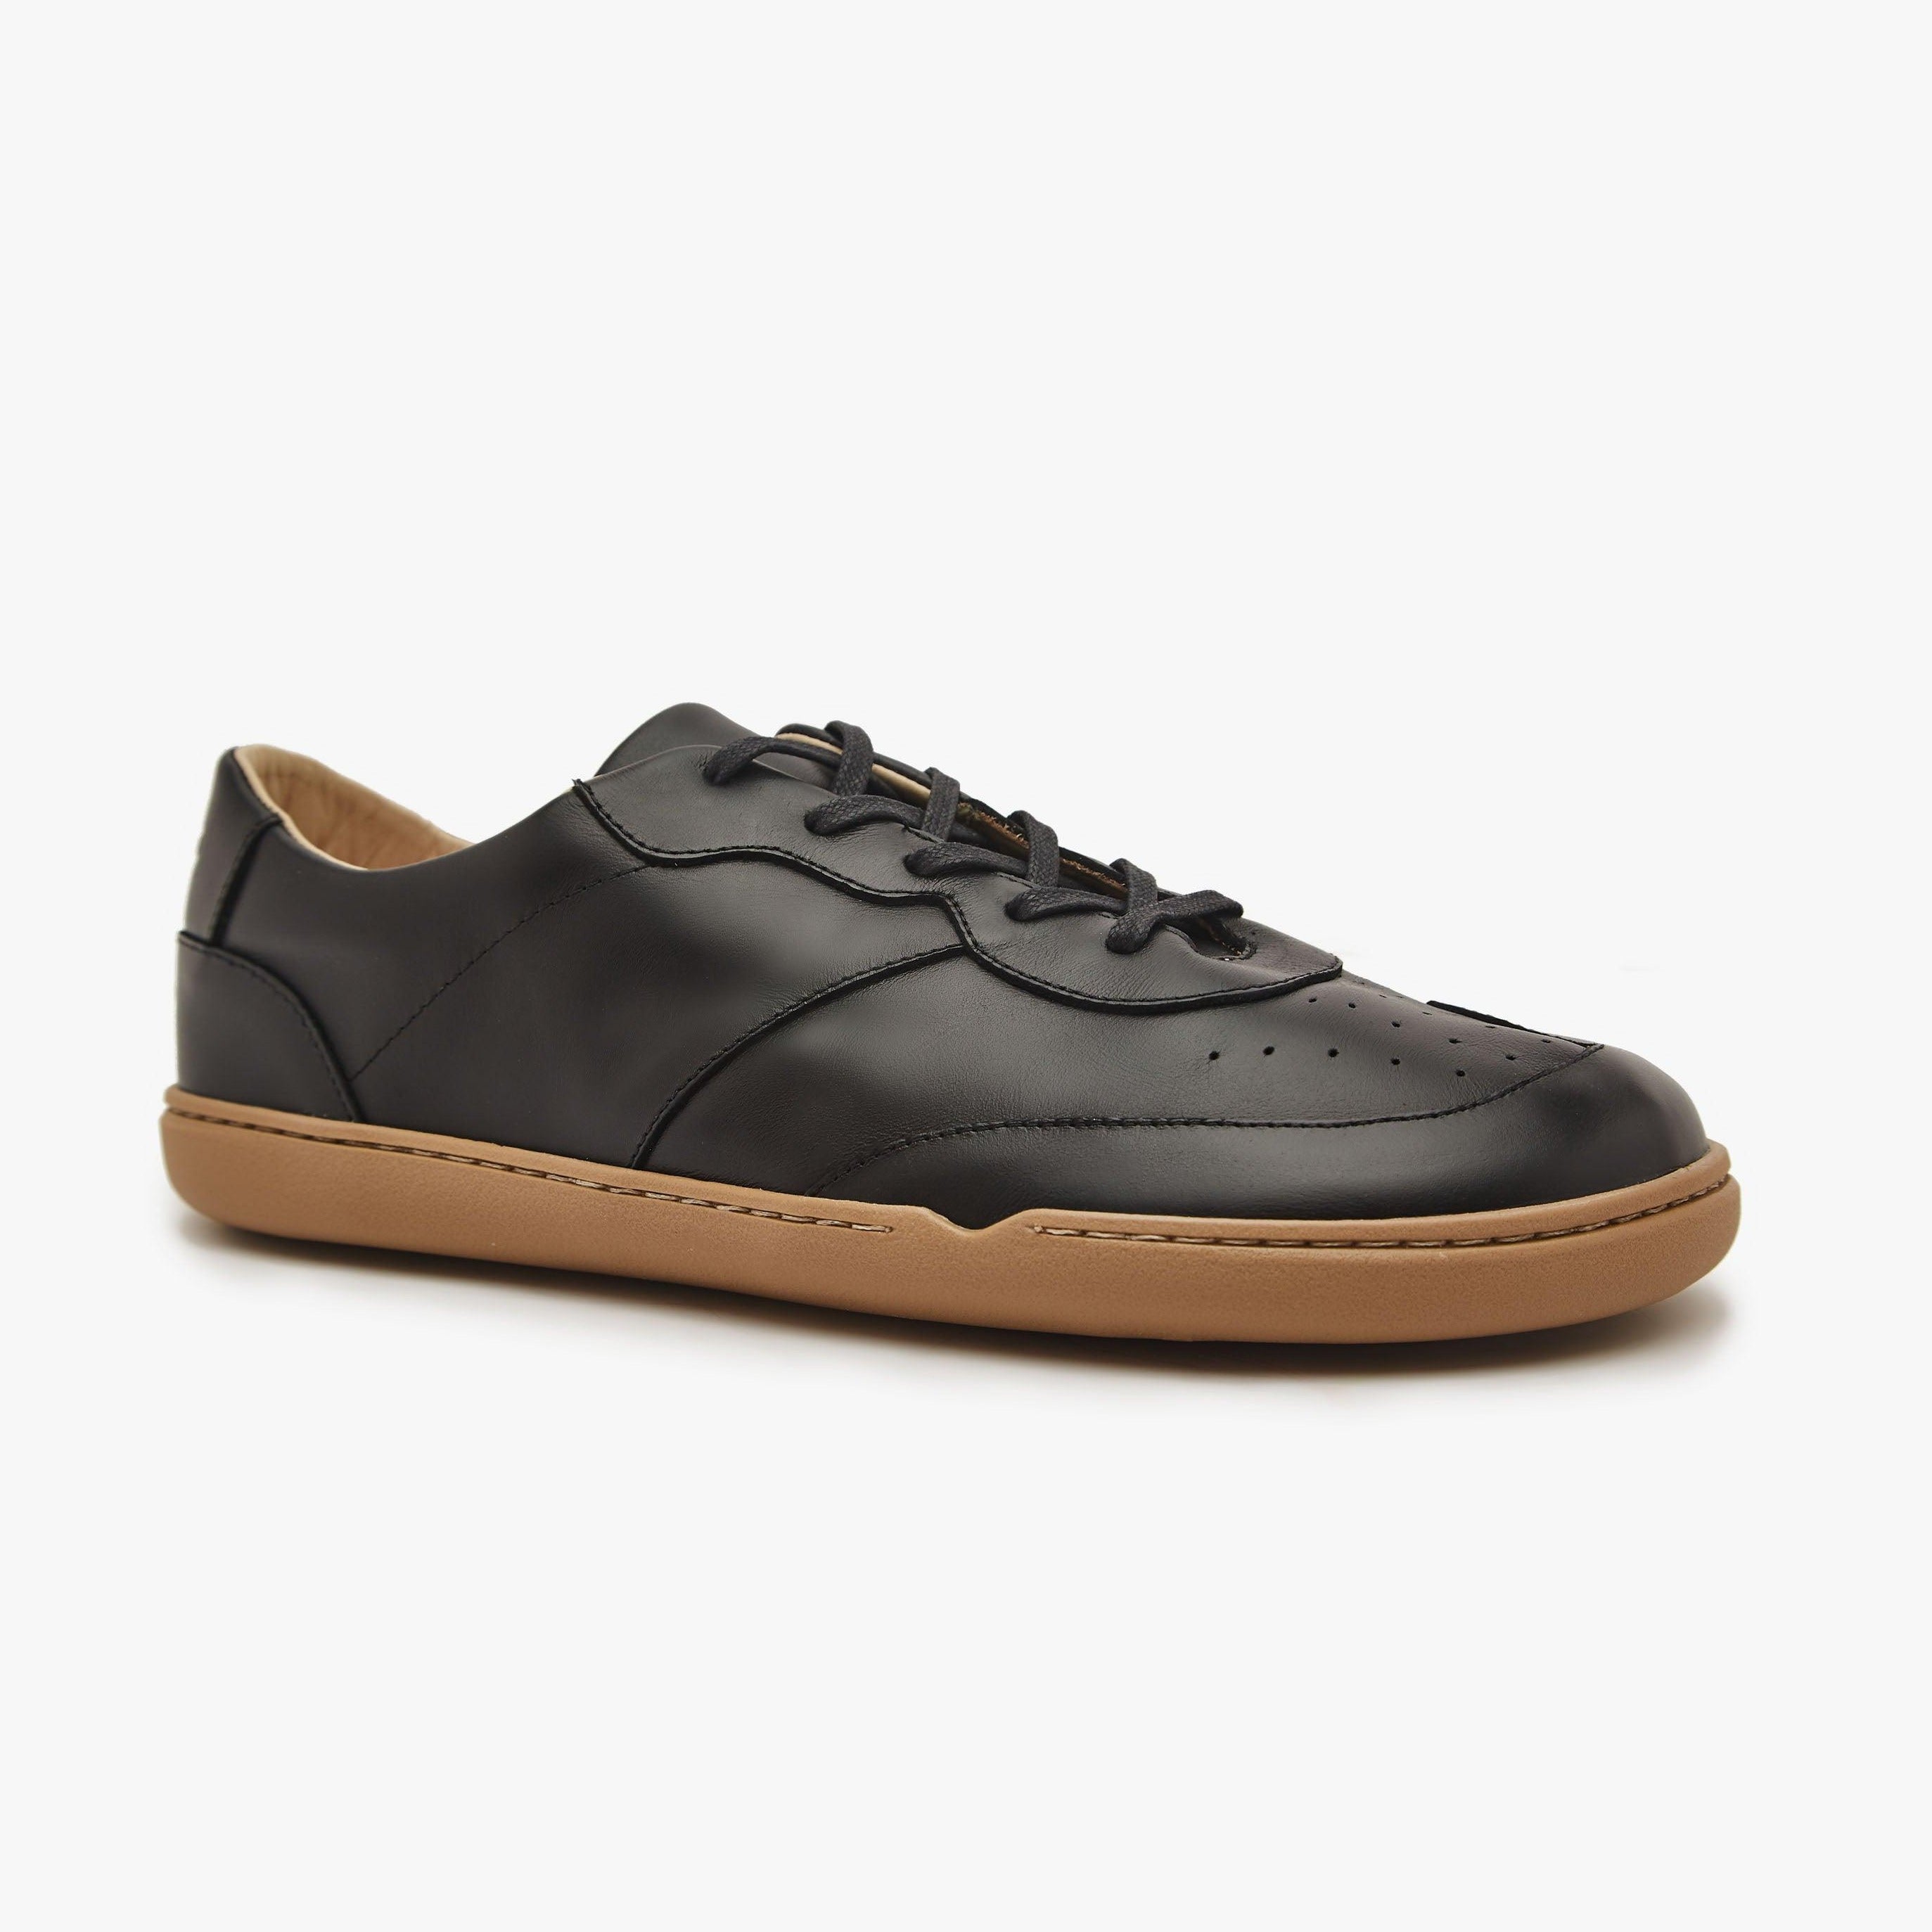 Zapatos Descalzos - Hombre - Piel Natural - Negro - Las Zapatillas Retro –  Origo Shoes